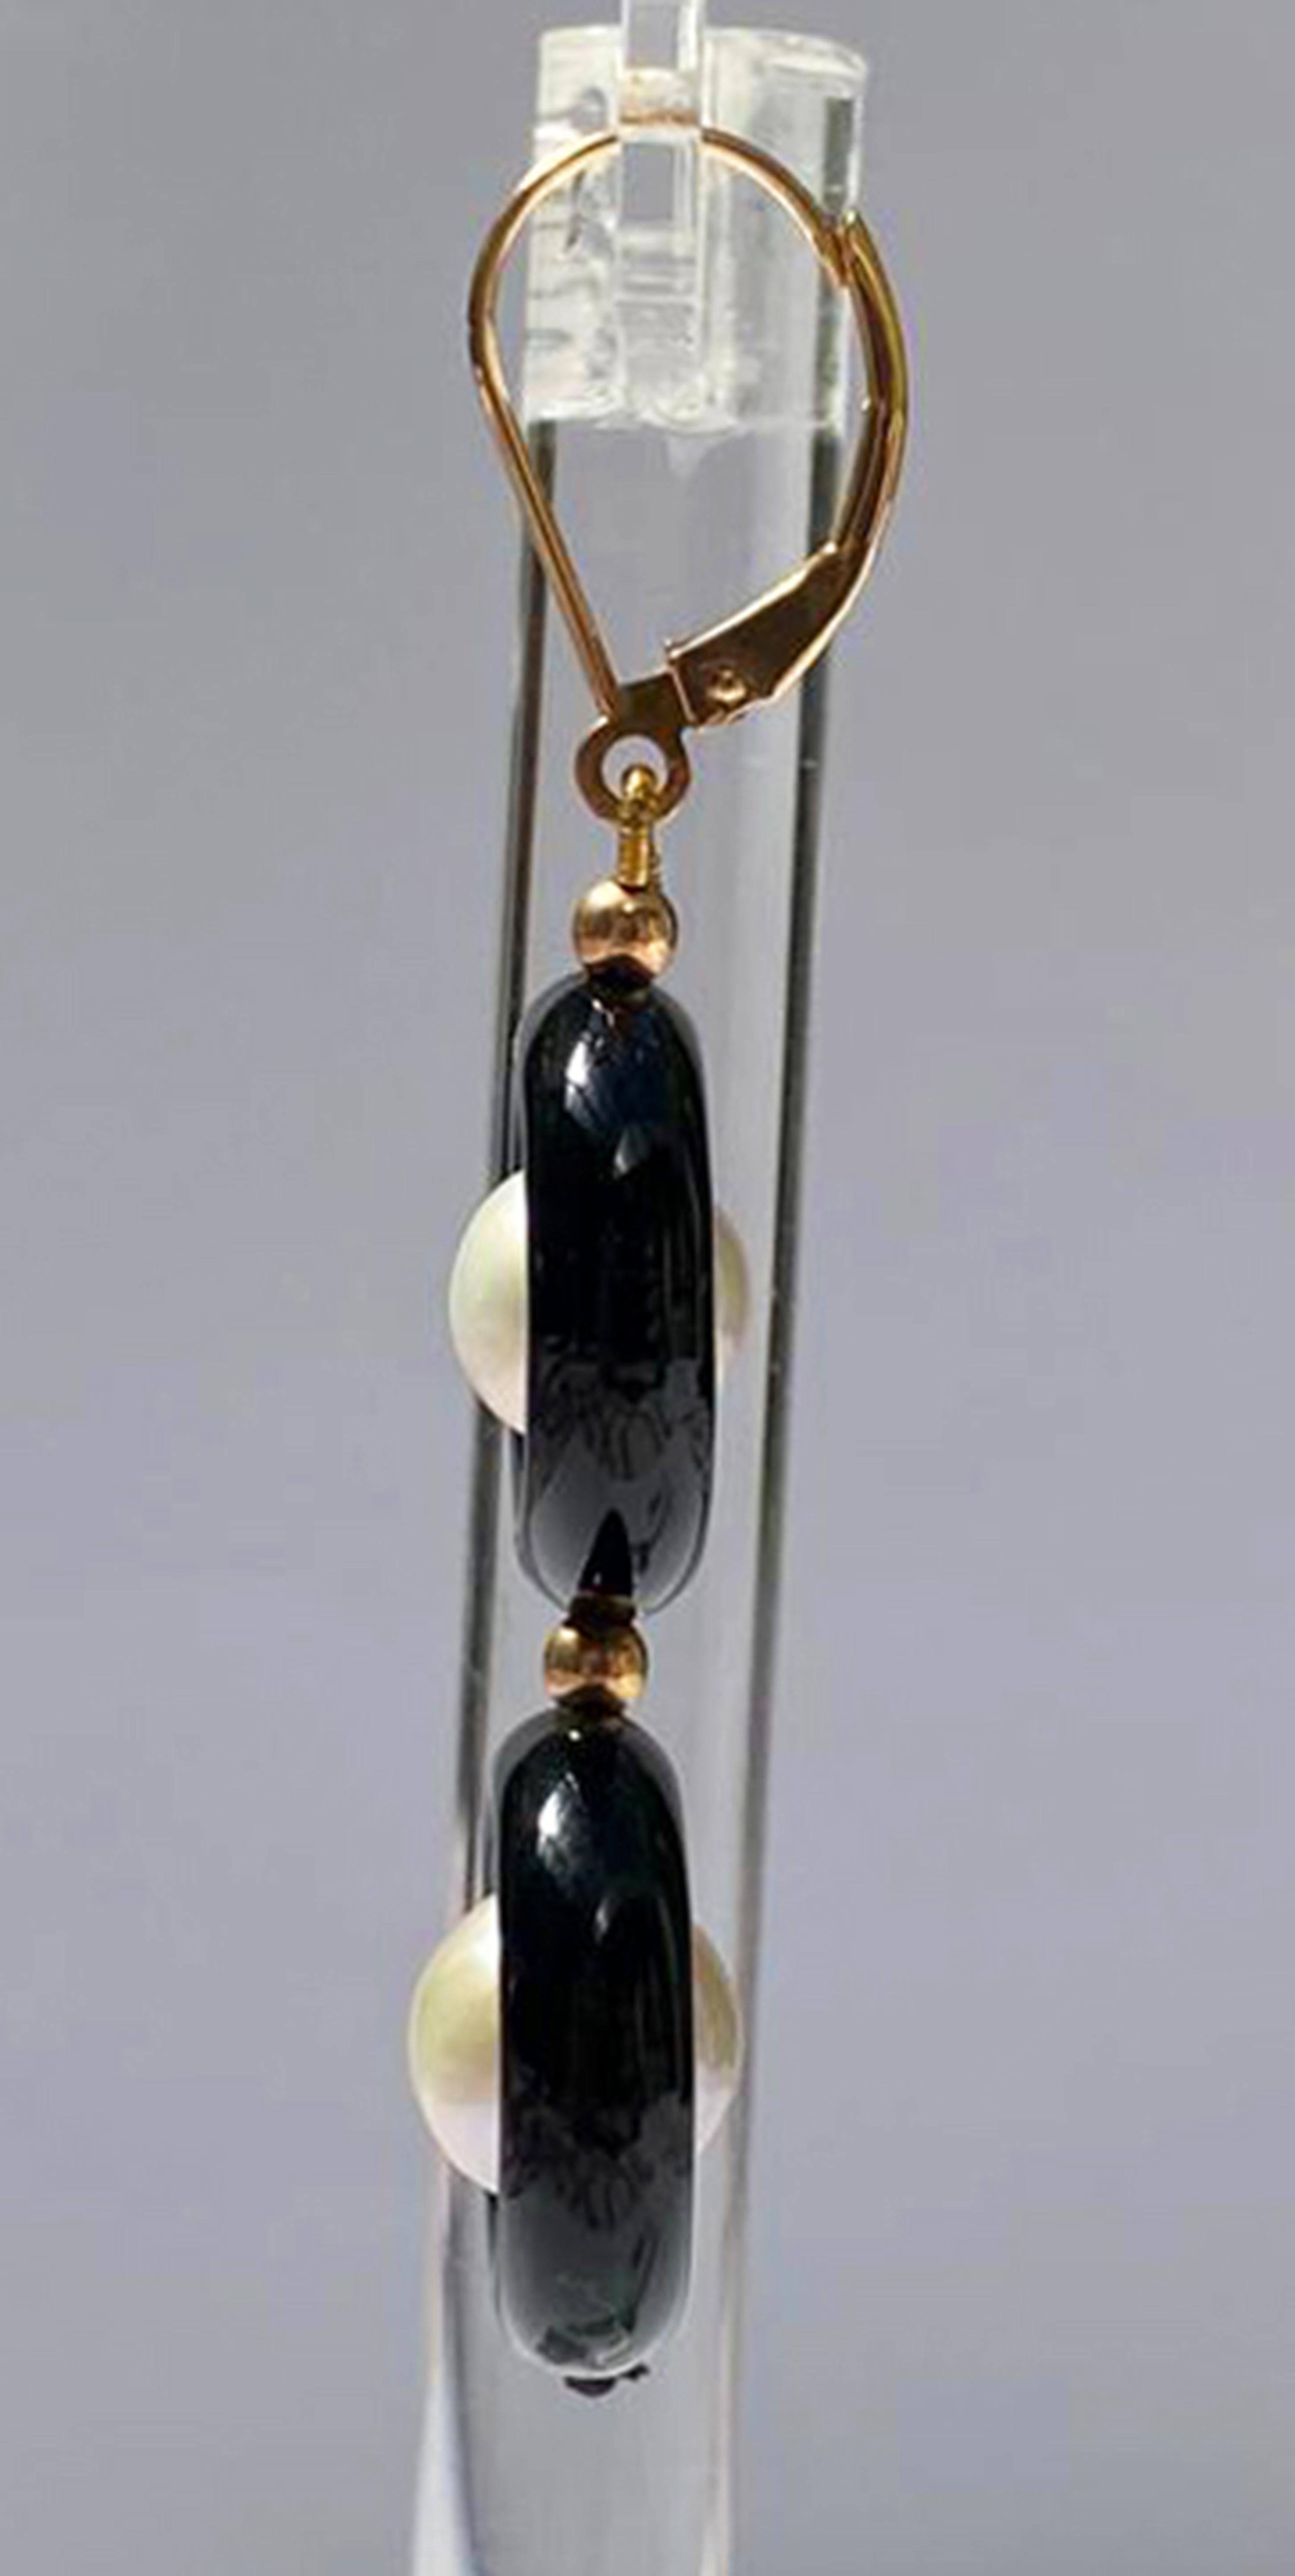 black onyx and pearl earrings